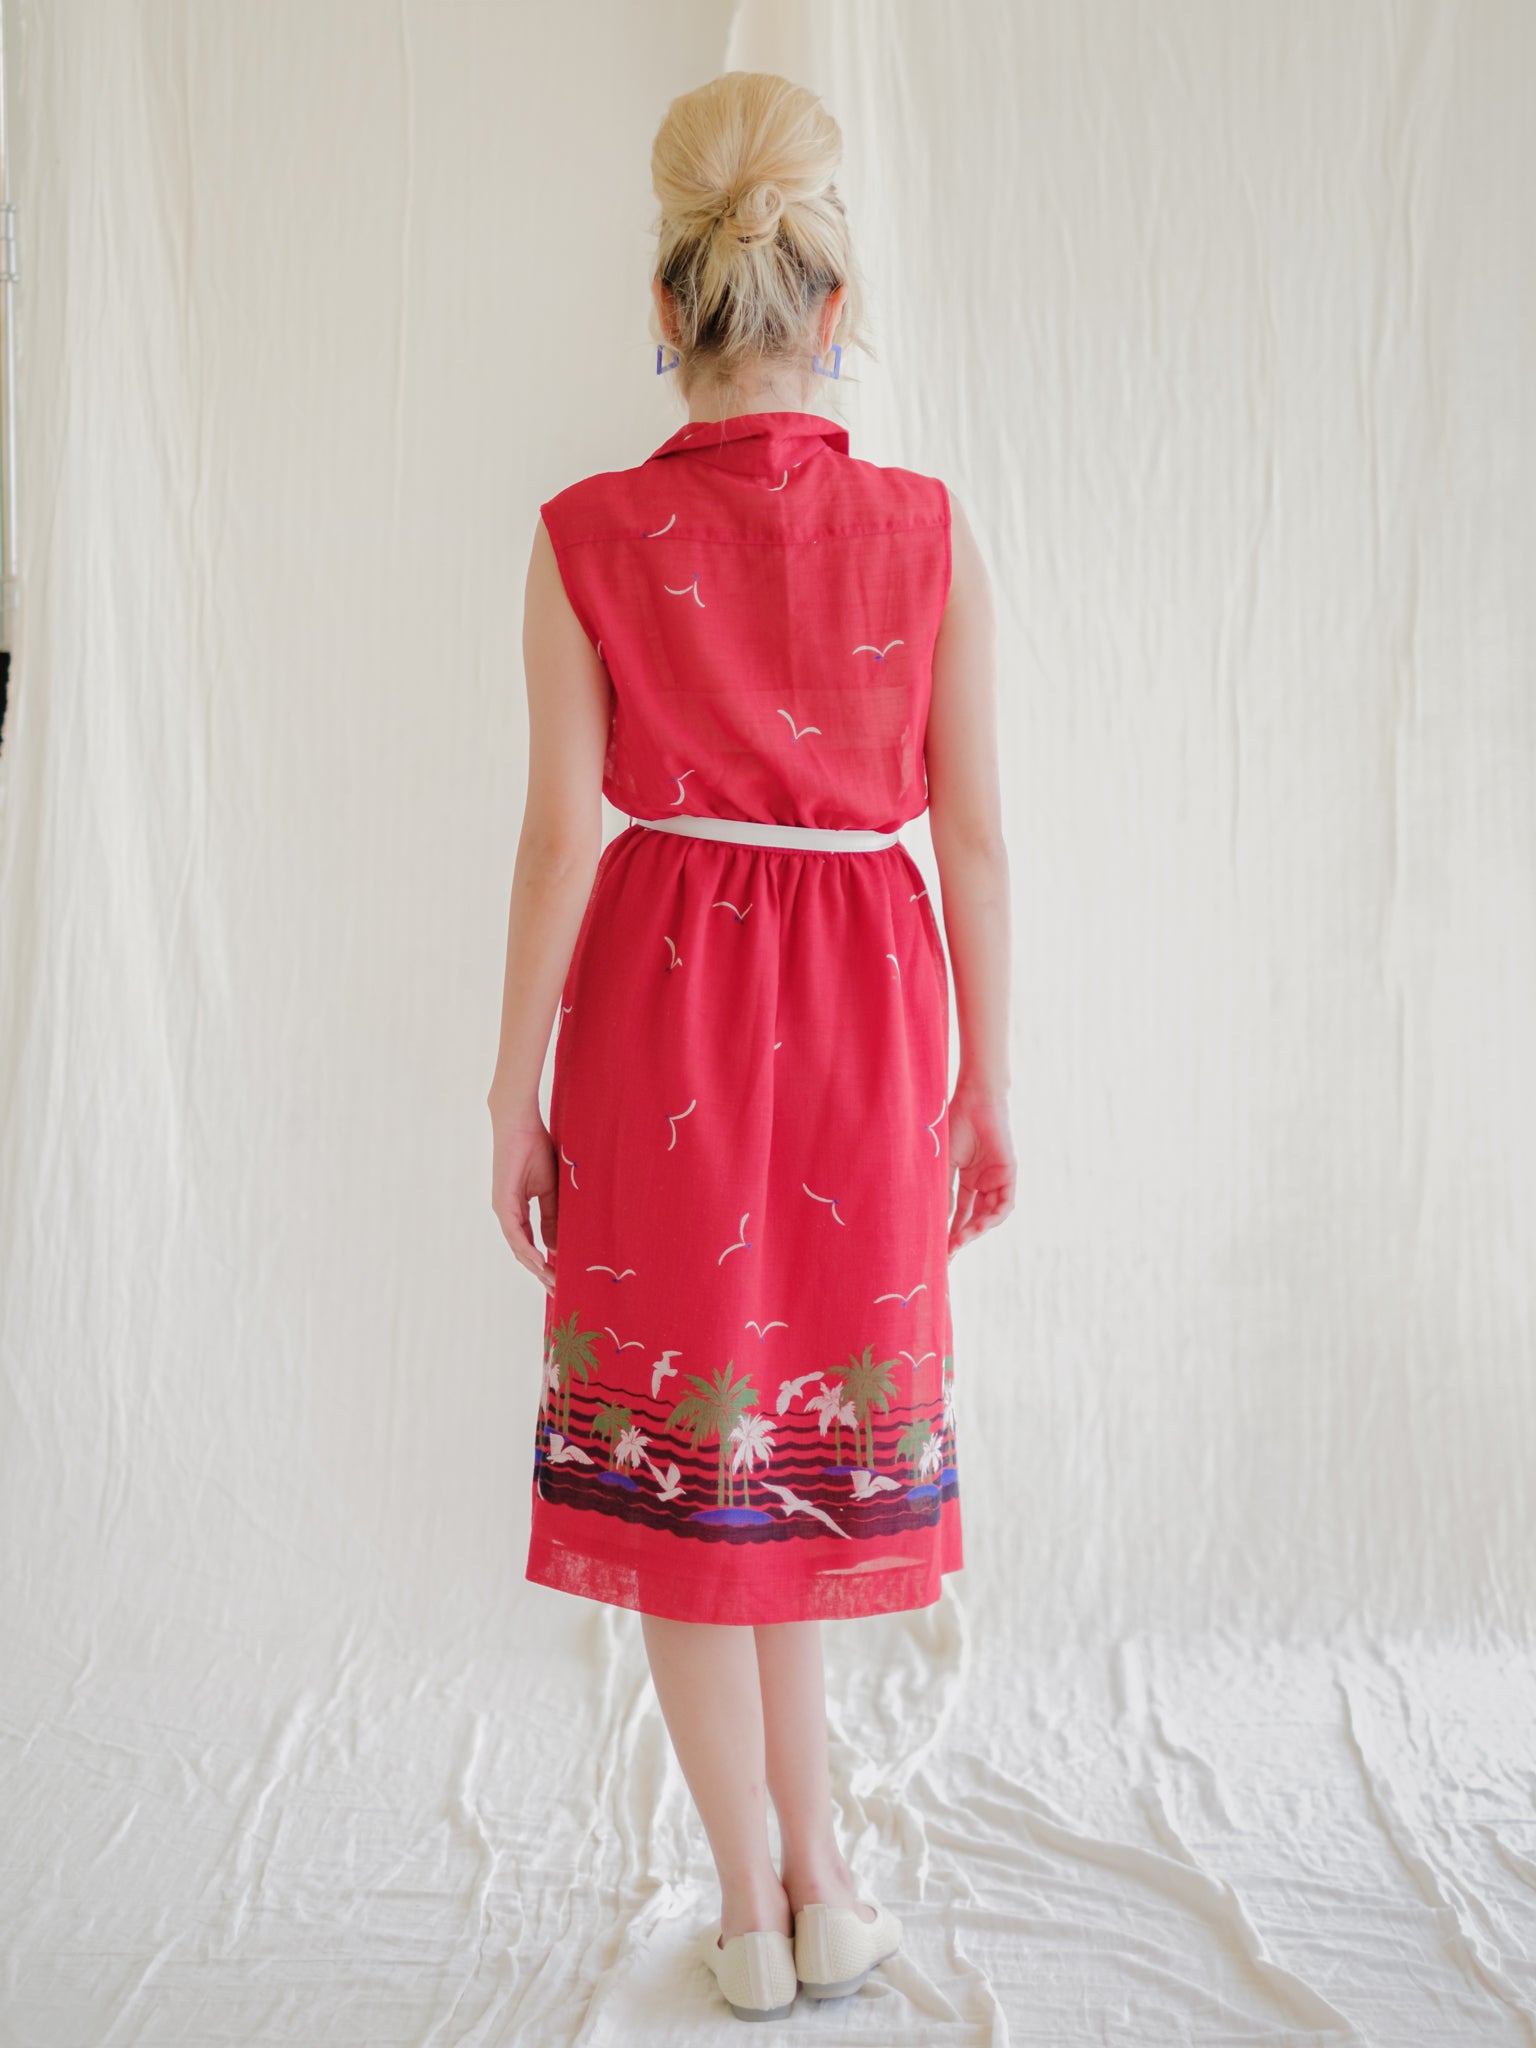 Palm tree print red vintage dress